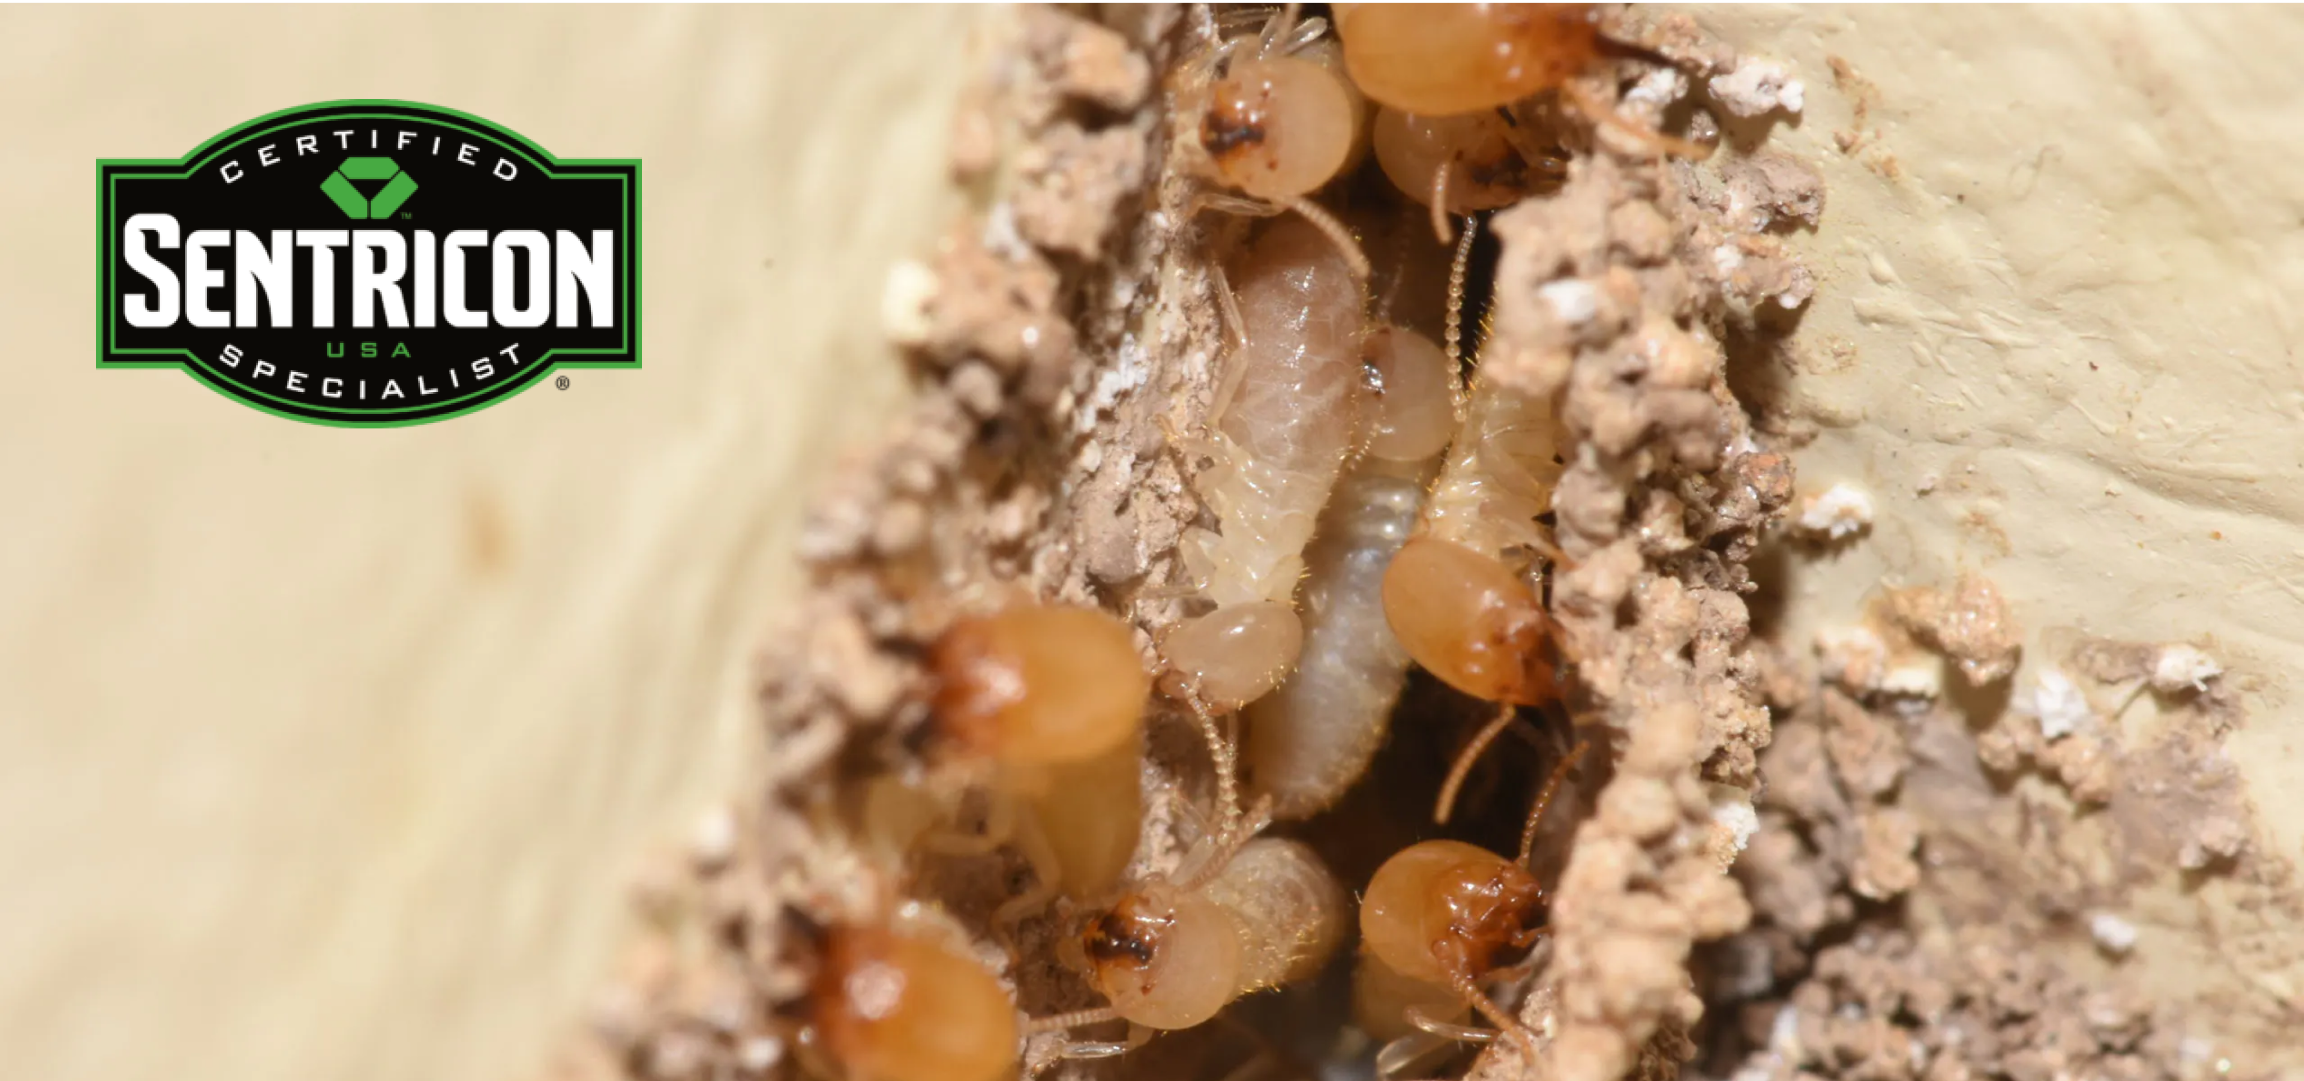 North Fulton Pest Solutions team conducting termite treatment in Alpharetta